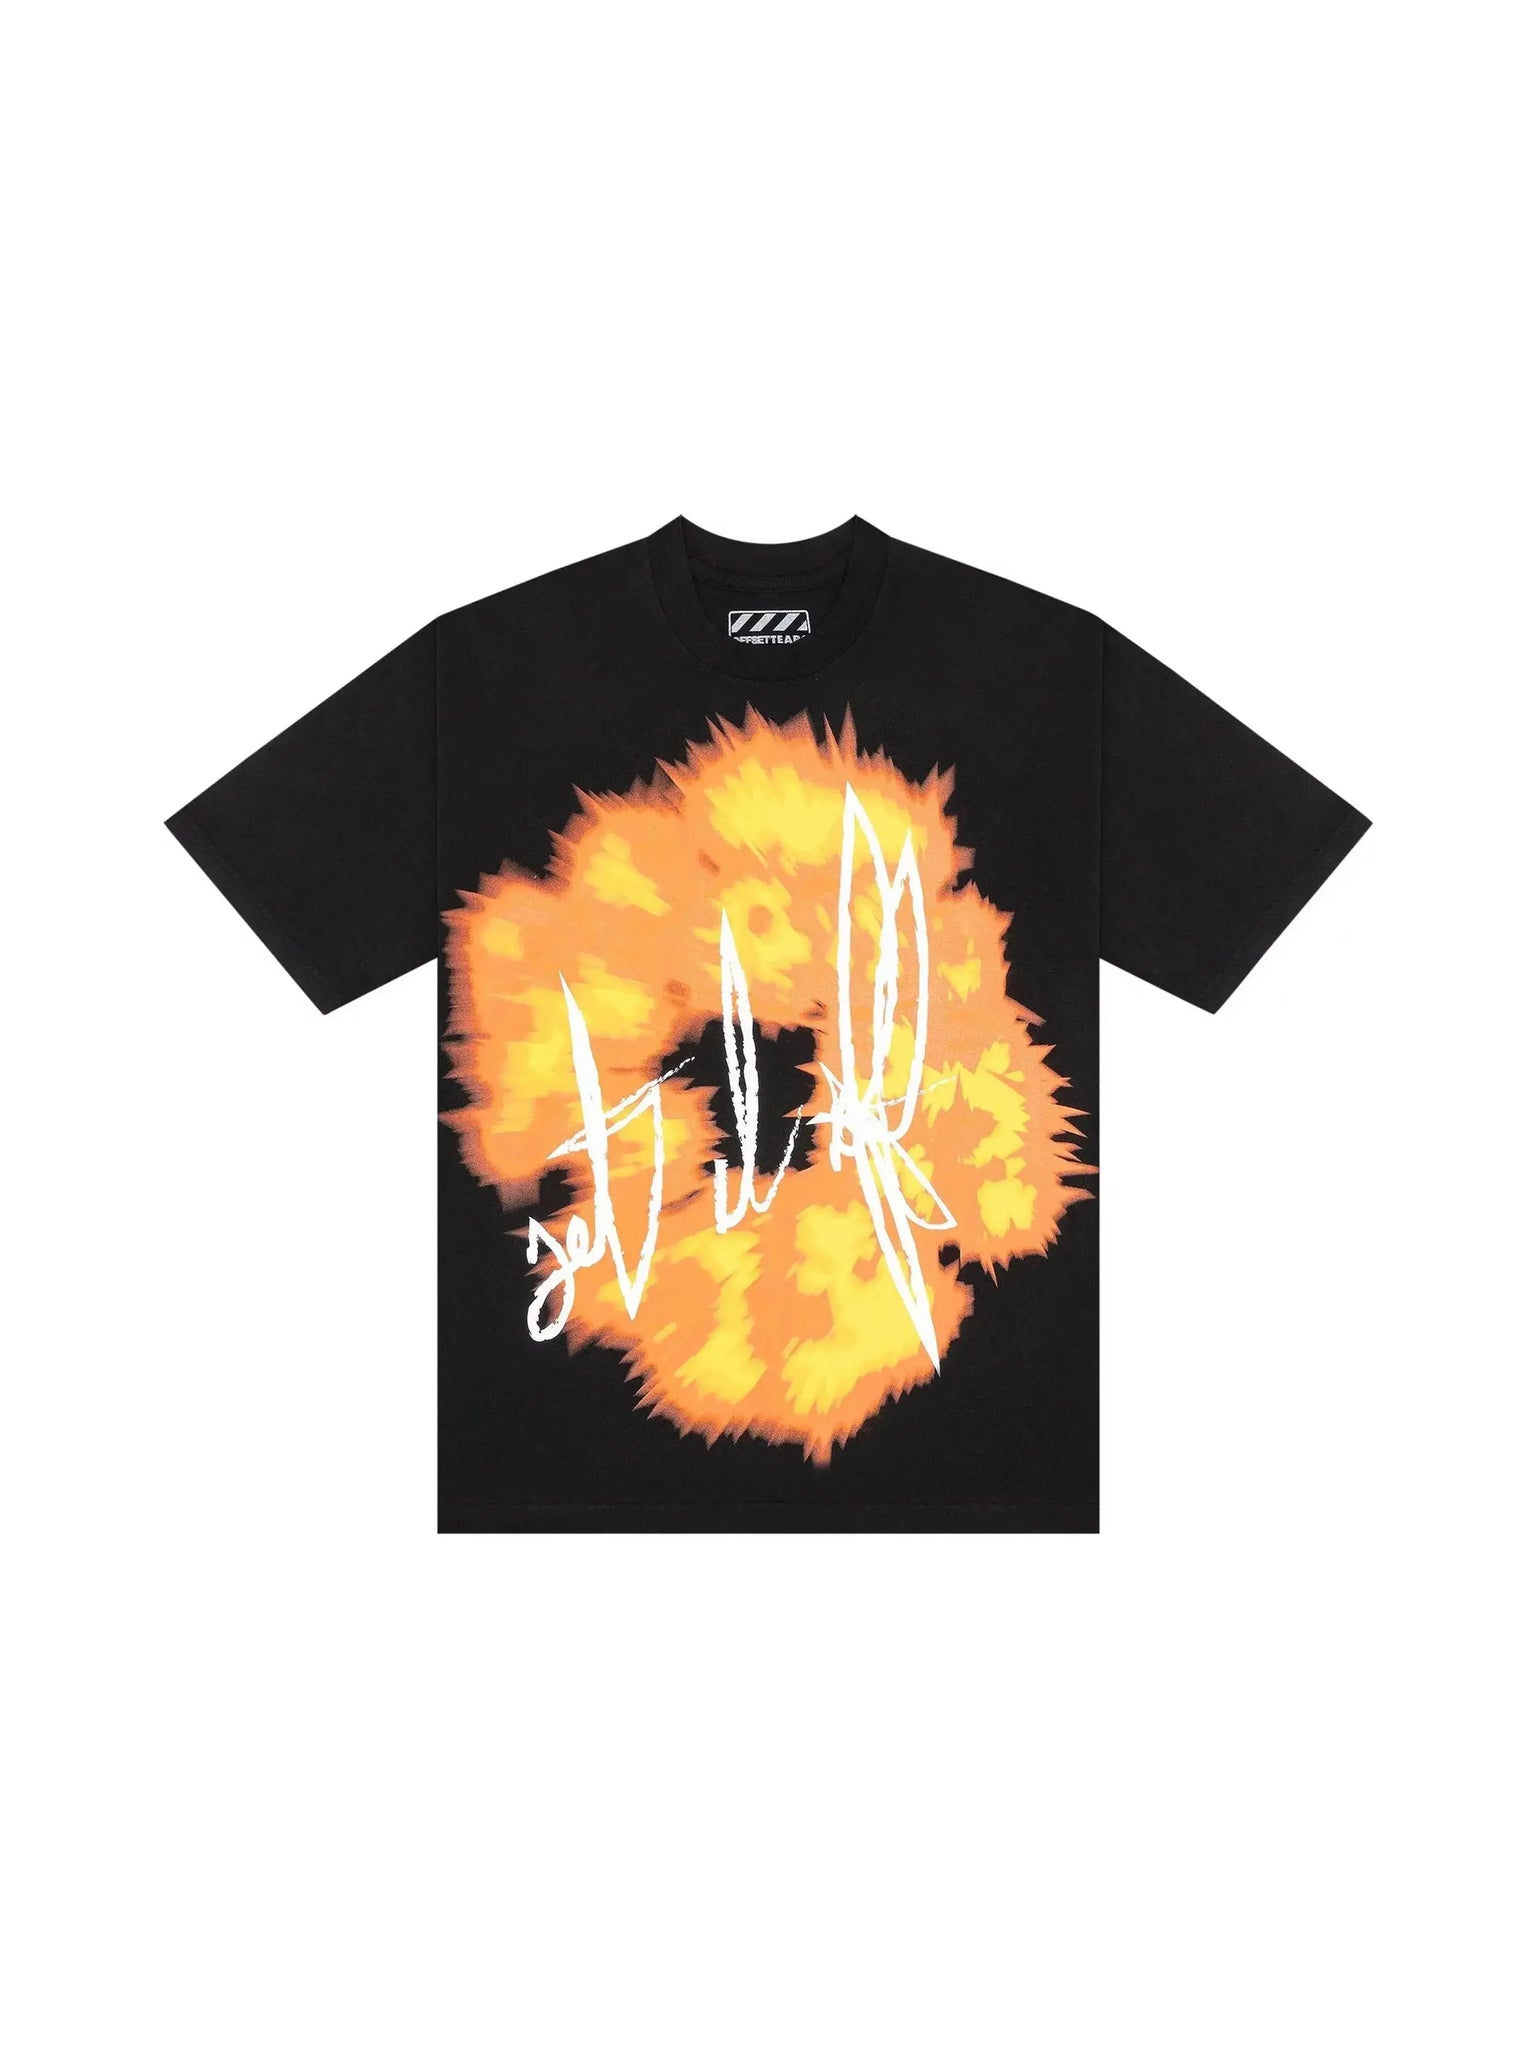 Denim Tears x Offset Set It Off #1 T-shirt Black in Auckland, New Zealand - Shop name